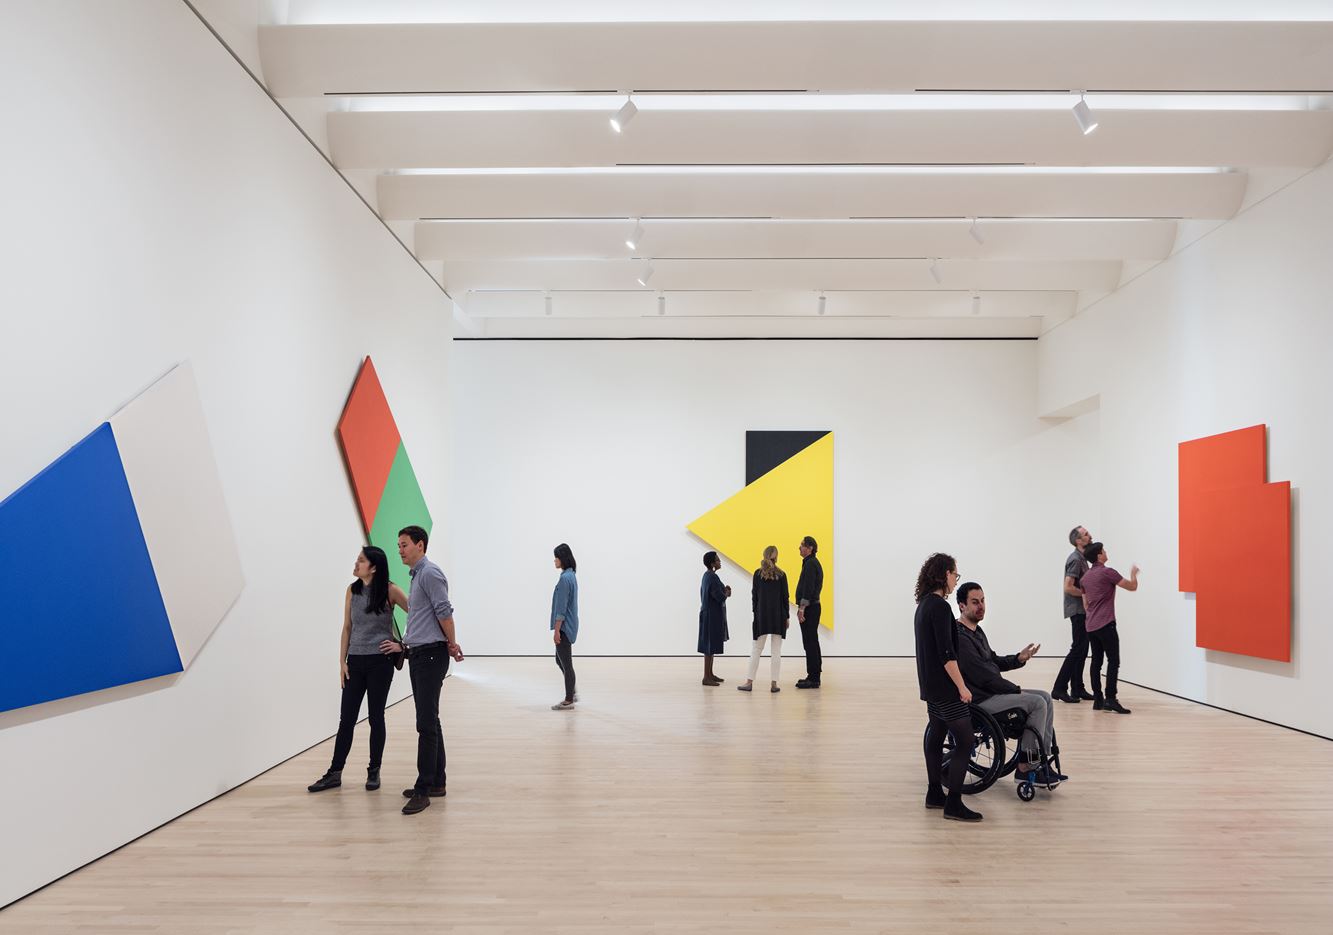 The New Design of San Francisco Museum of Modern Art by Snøhetta